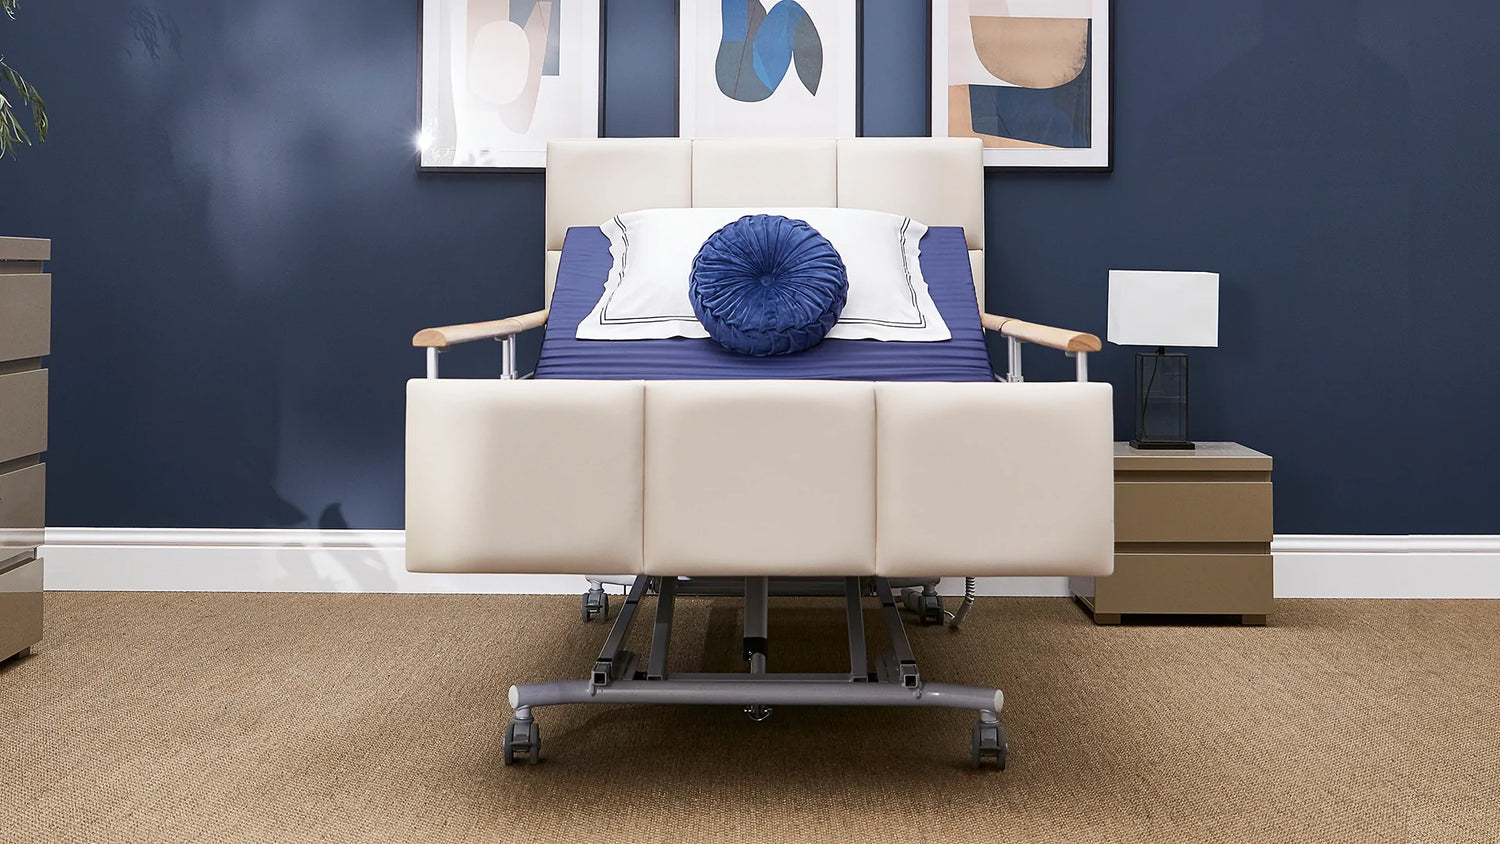 Bespoke design care bed in a bedroom